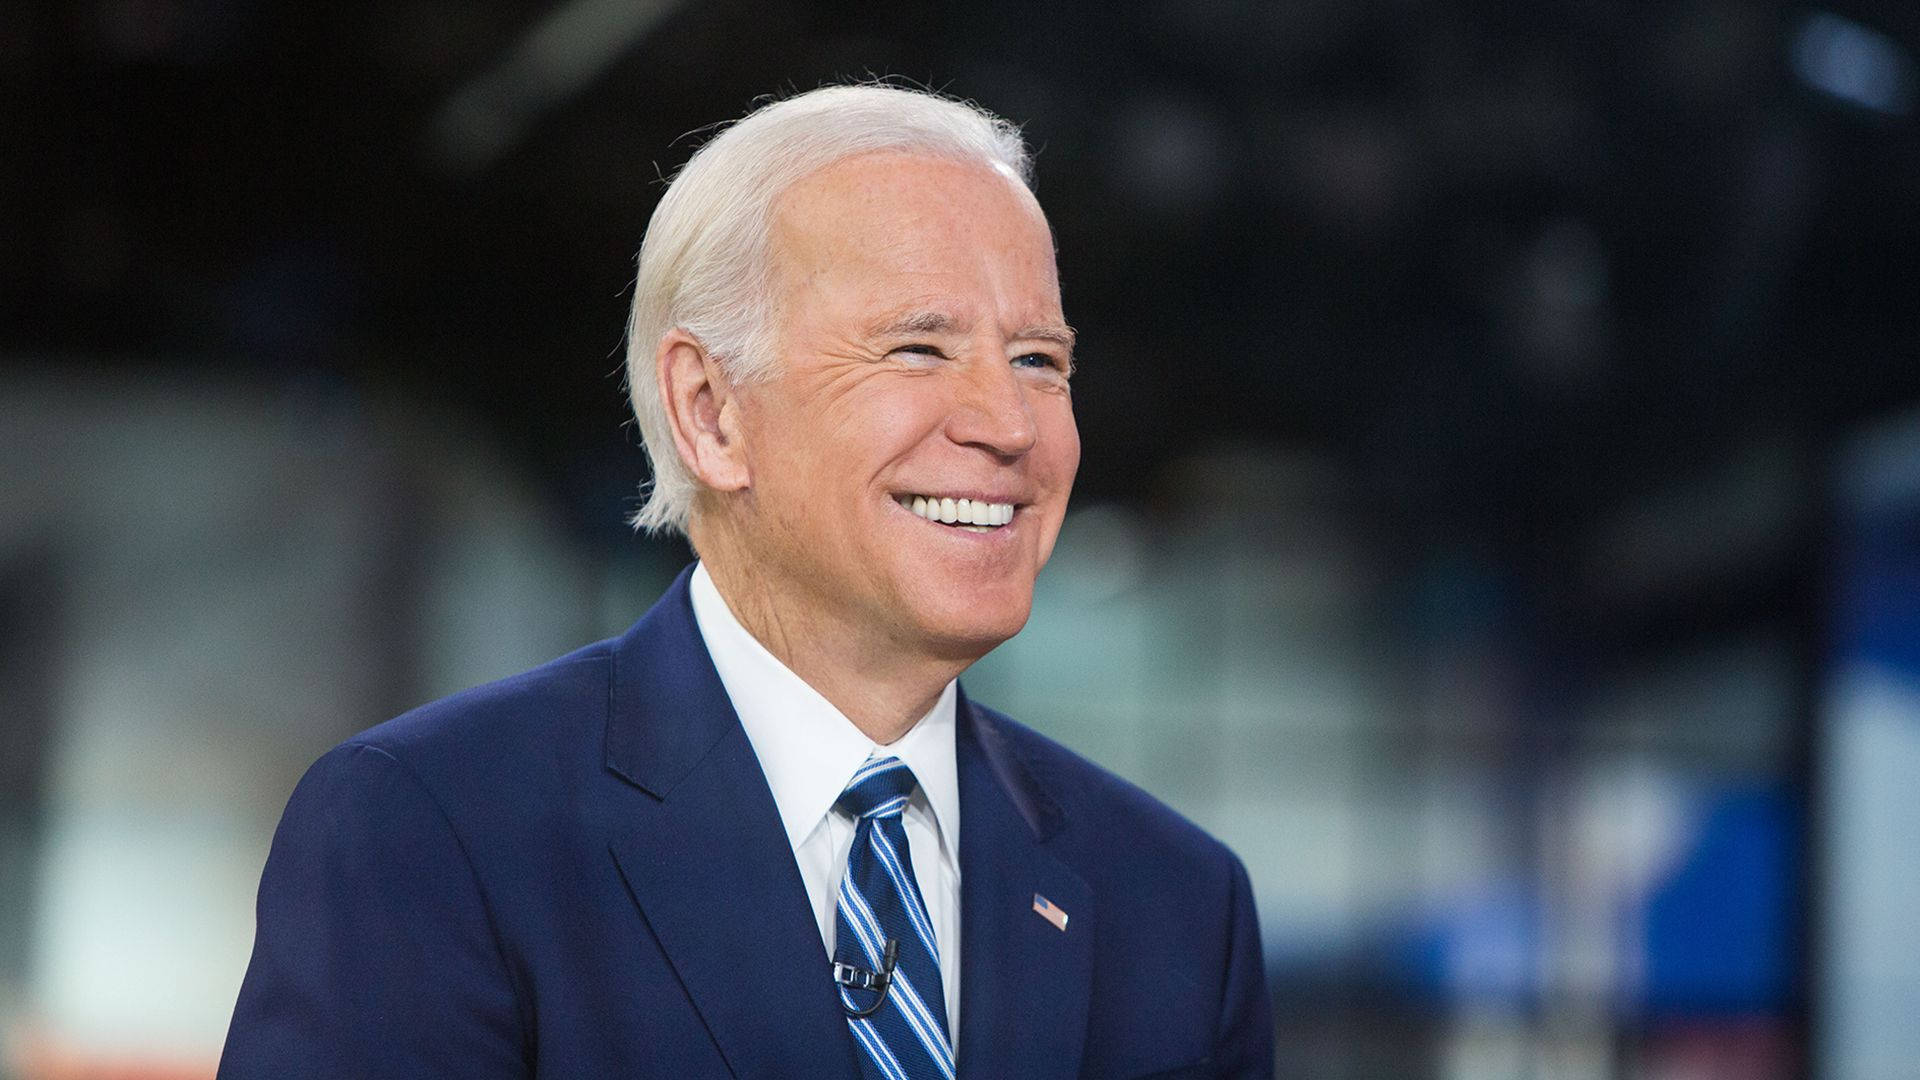 Smiling Joe Biden